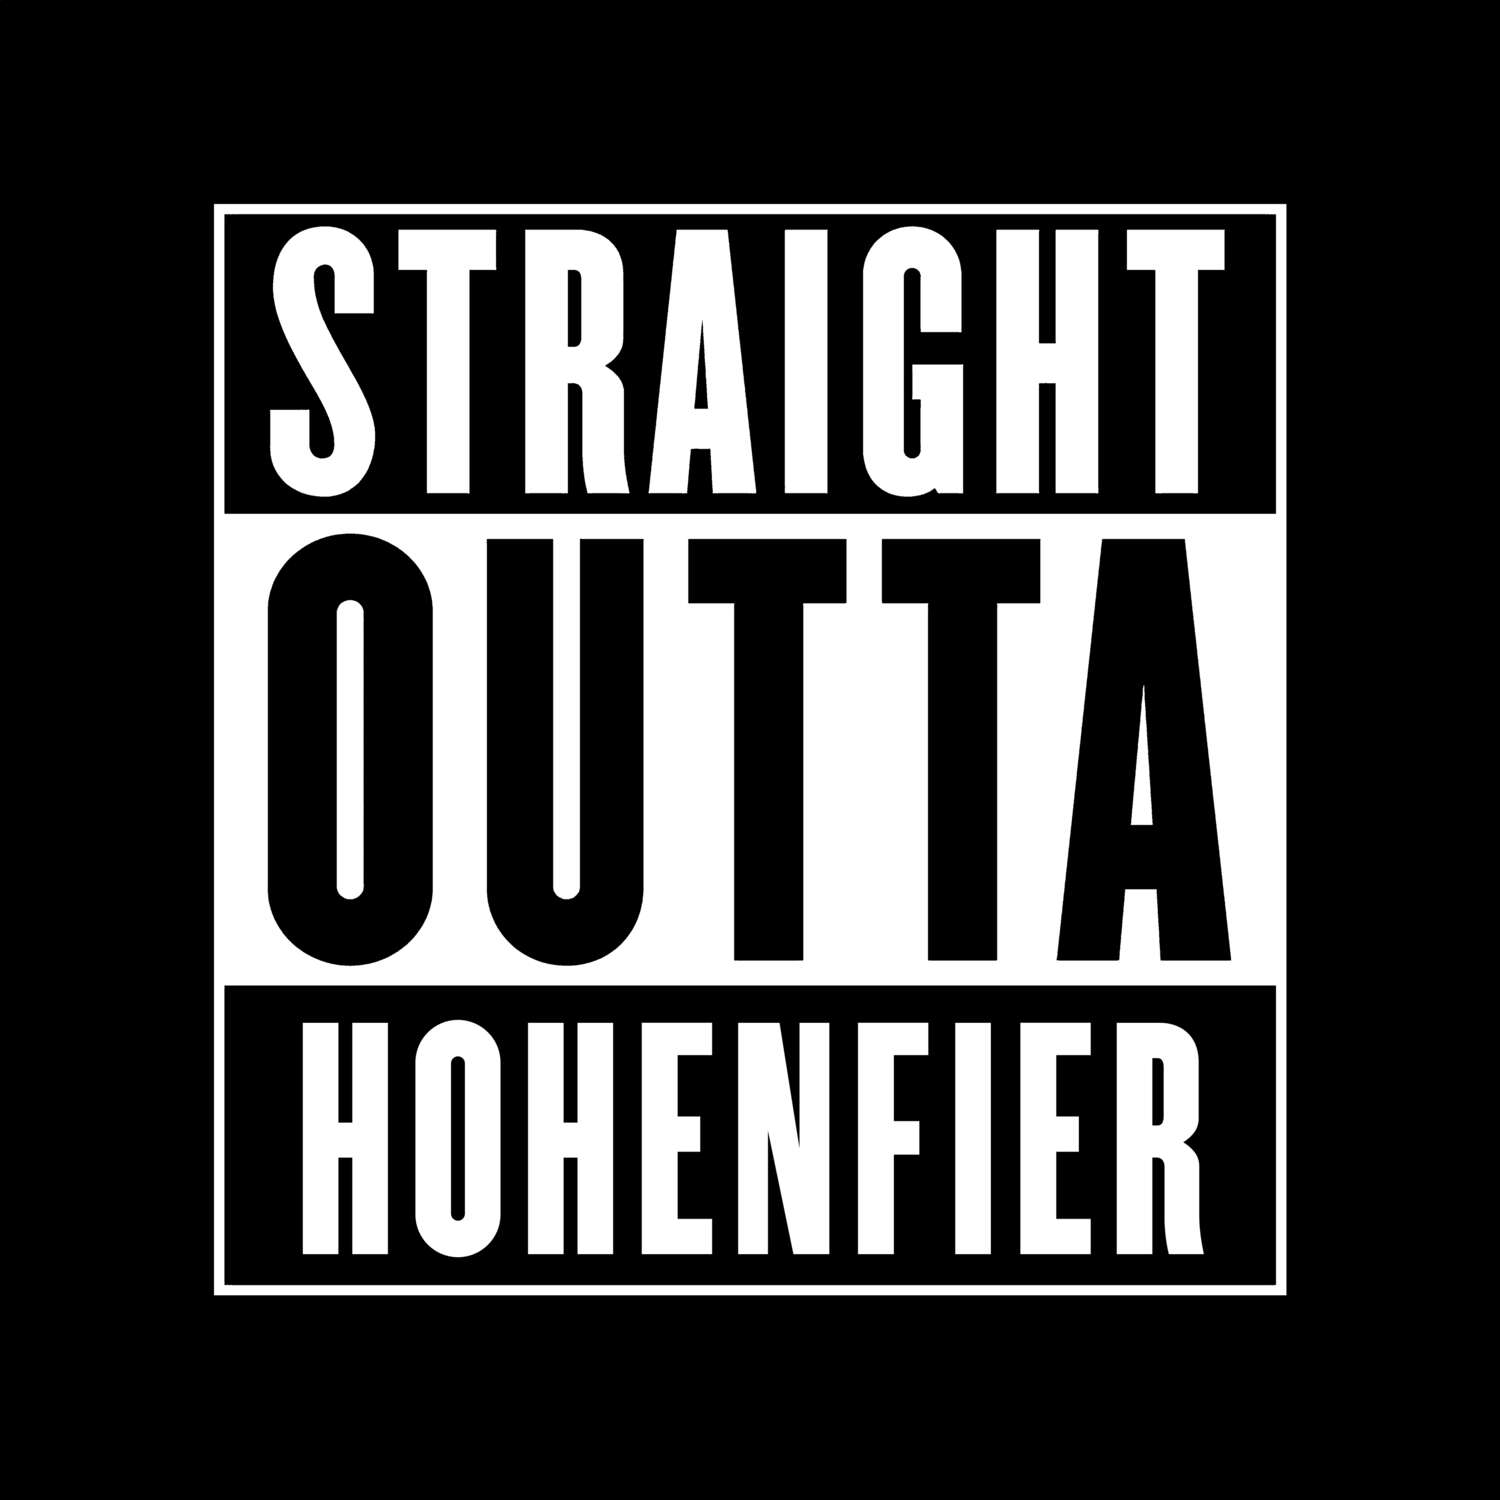 Hohenfier T-Shirt »Straight Outta«